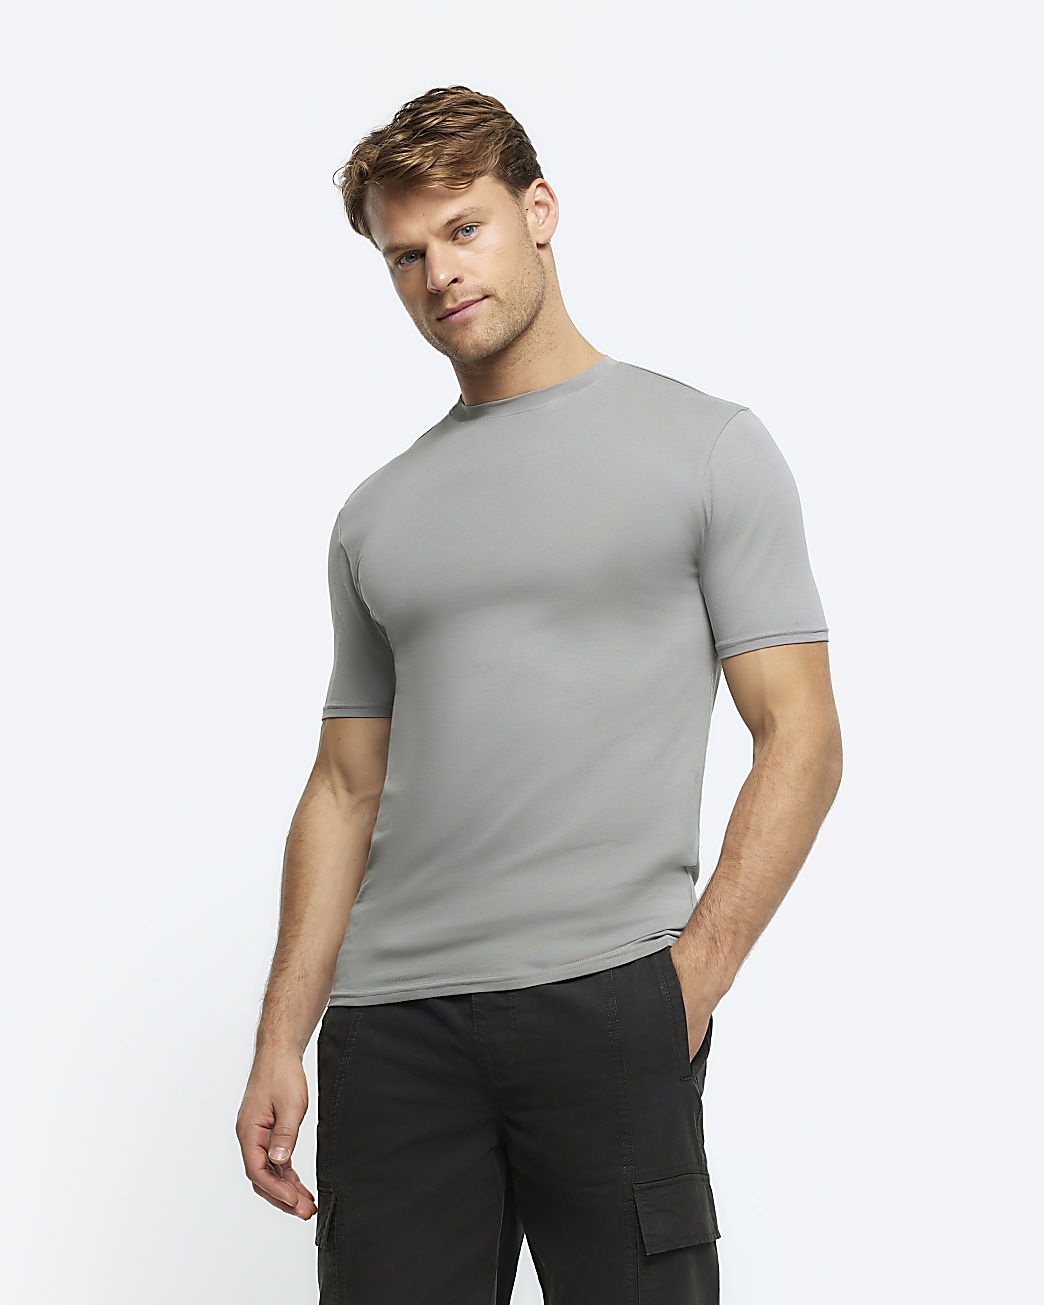 T-Shirts for Men, Short Sleeve Men's T-Shirts